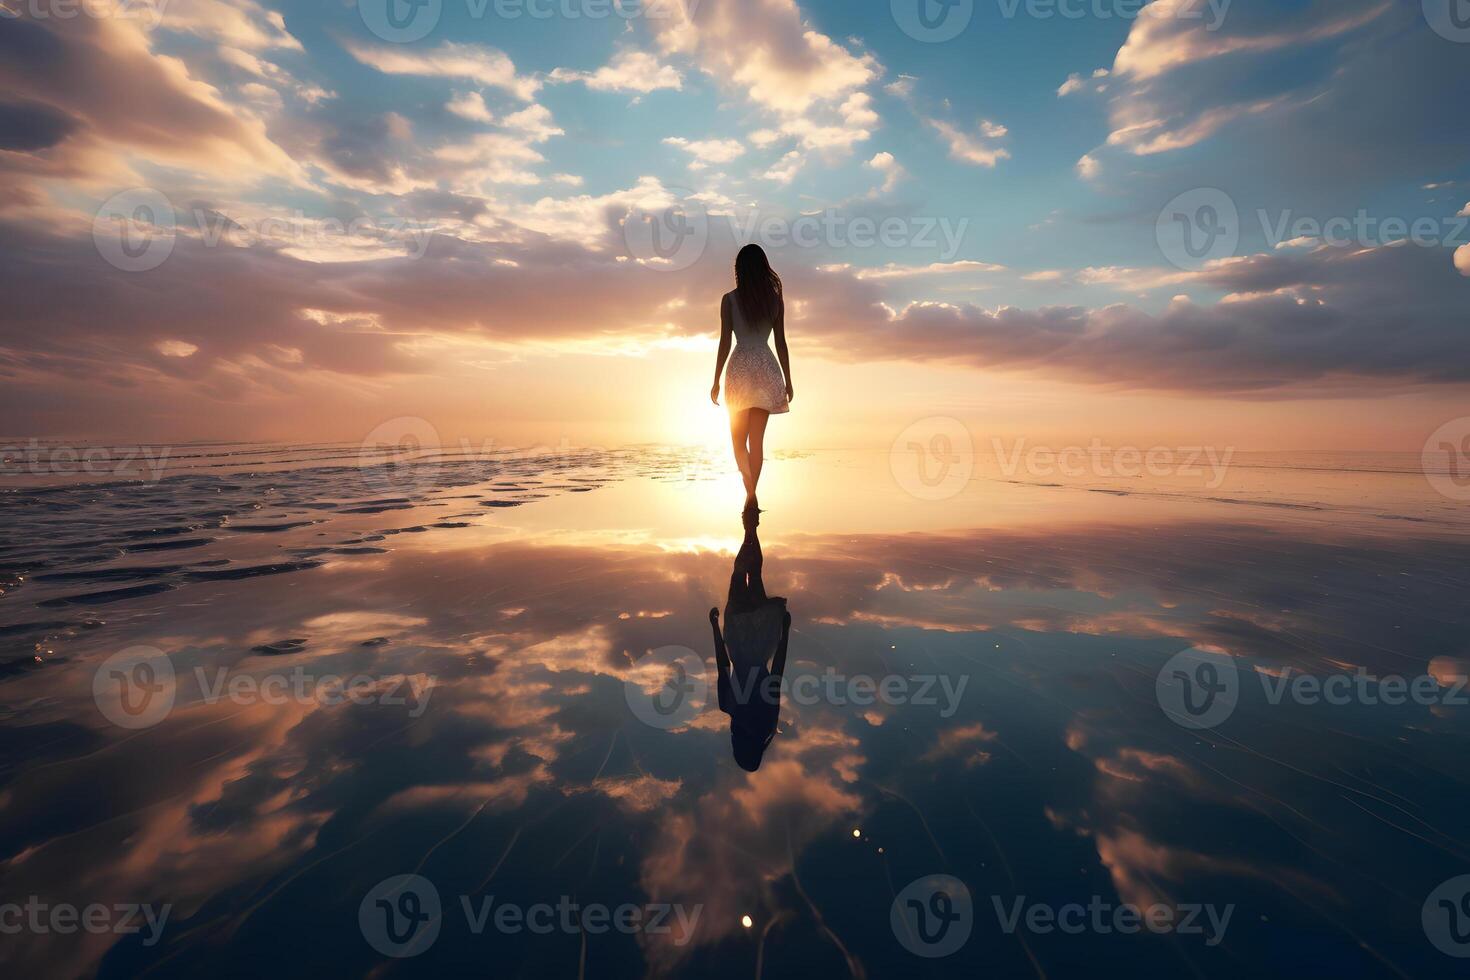 AI generated Woman Walking Across Large Body of Water photo